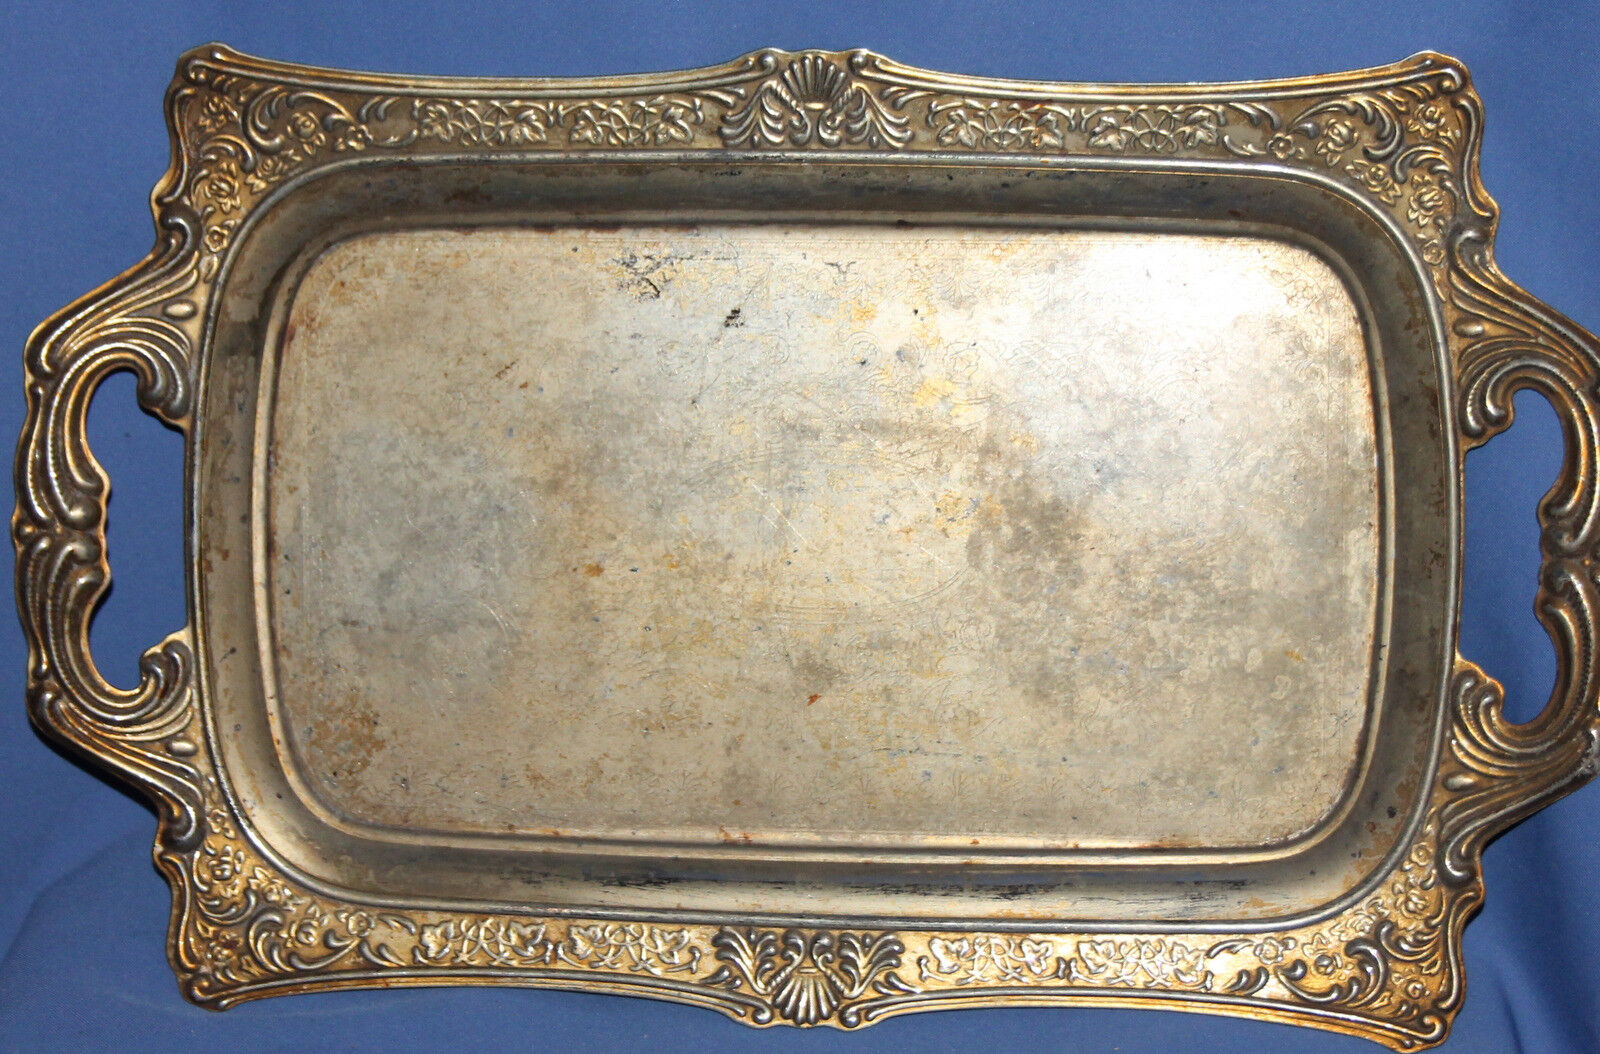 Vintage ornate metal serving tray